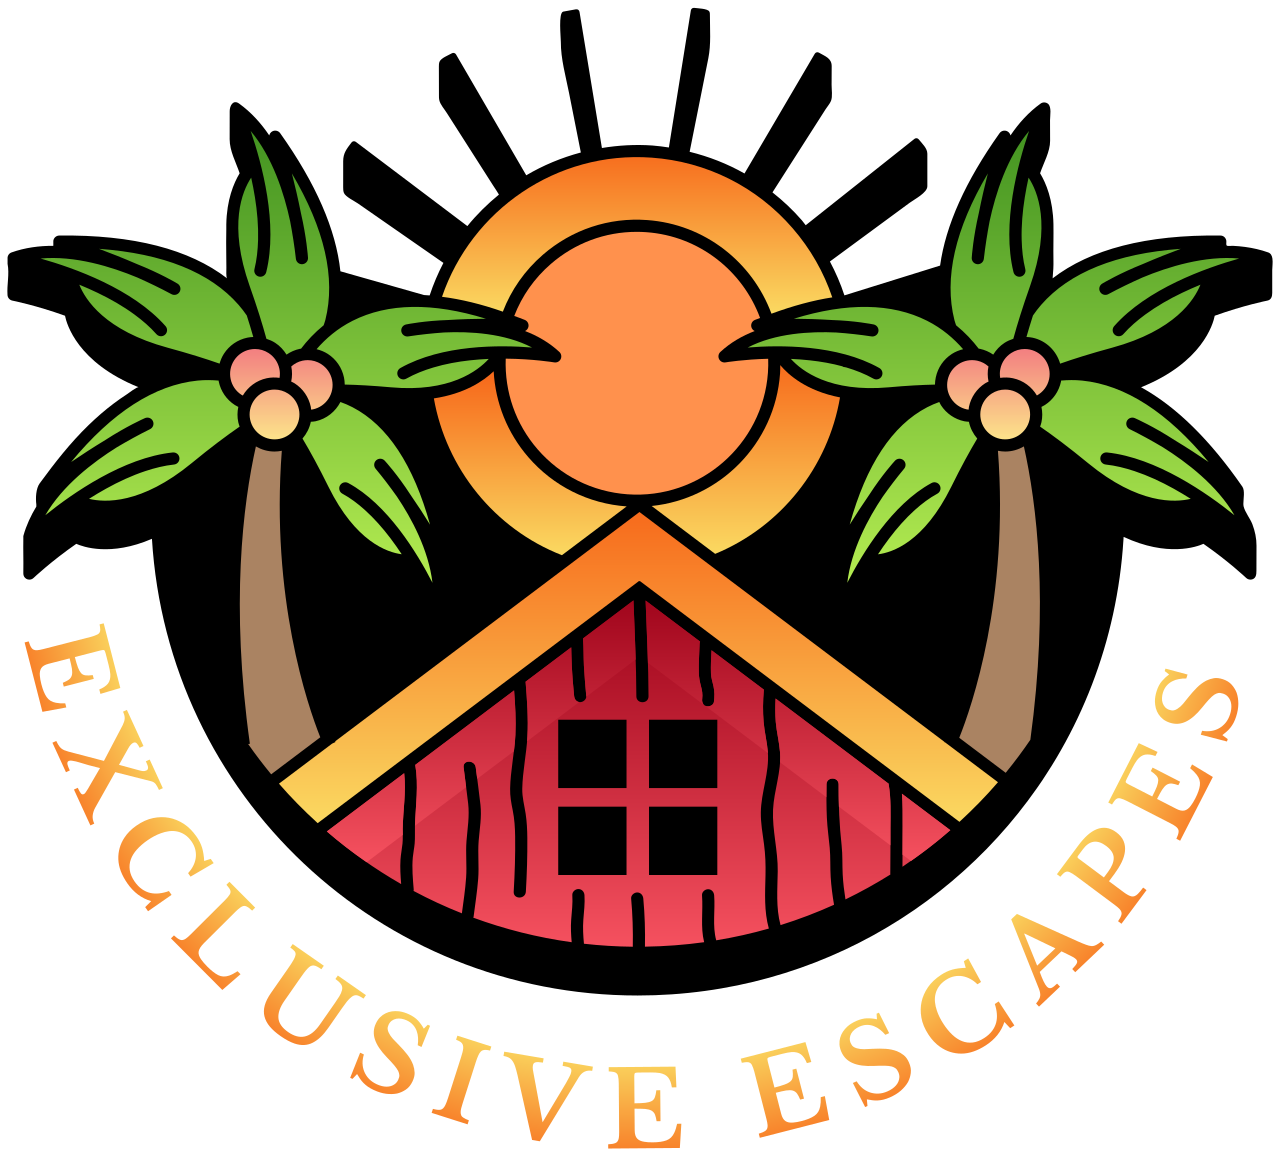 EXCLUSIVE ESCAPES 's logo